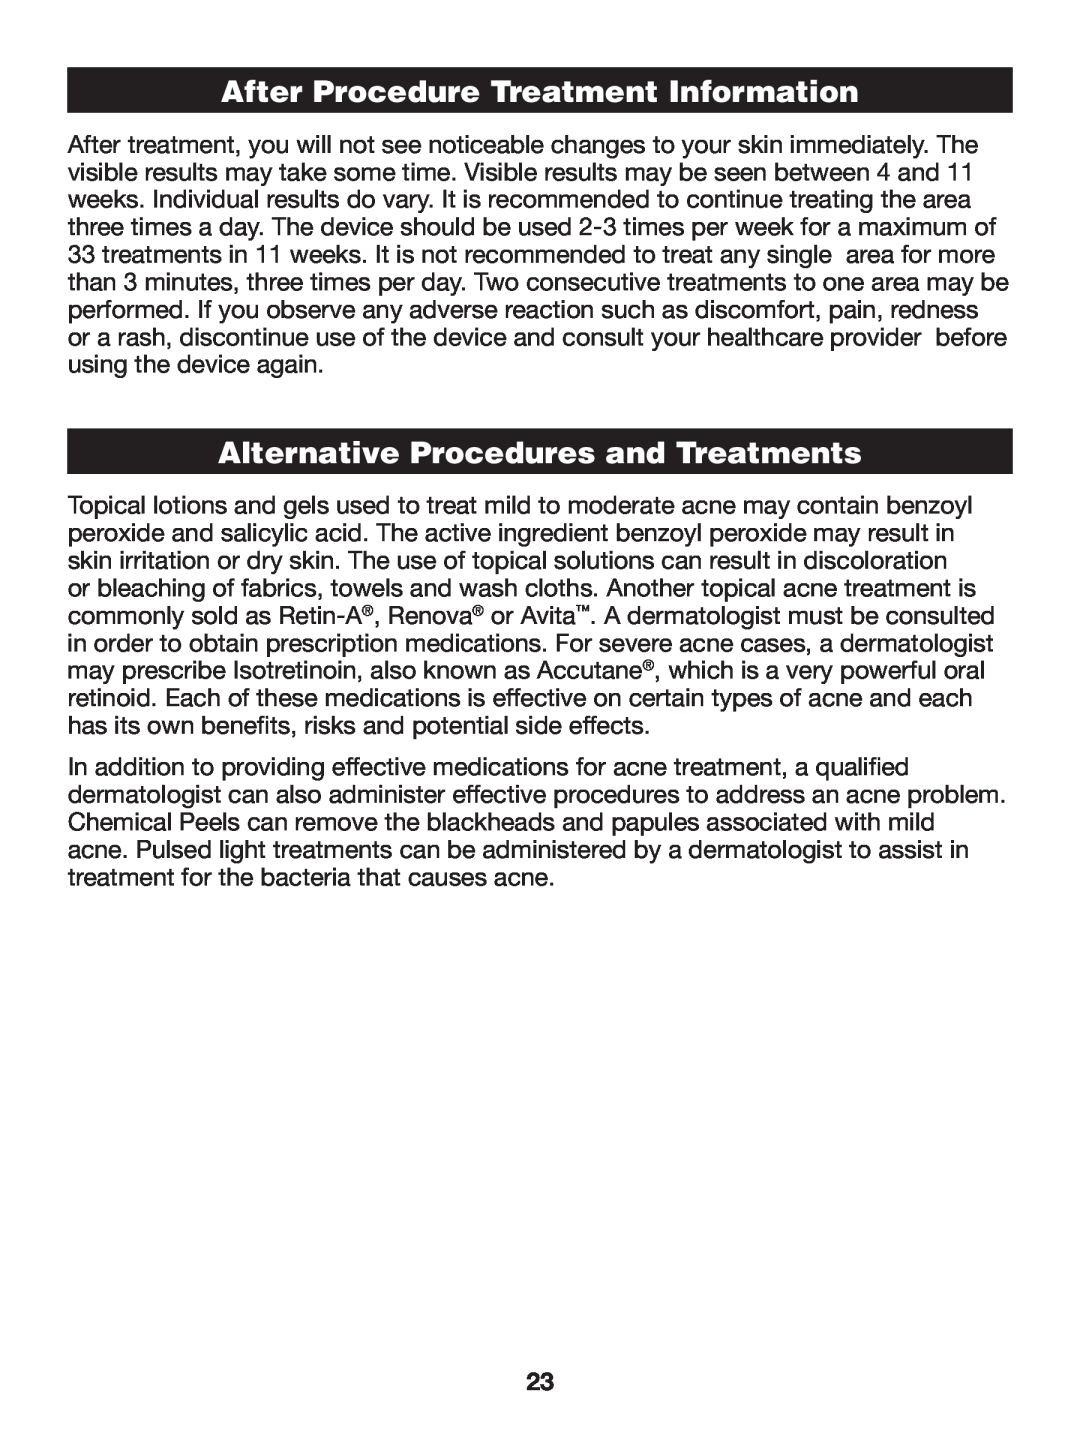 Verilux CW01 manual After Procedure Treatment Information, Alternative Procedures and Treatments 